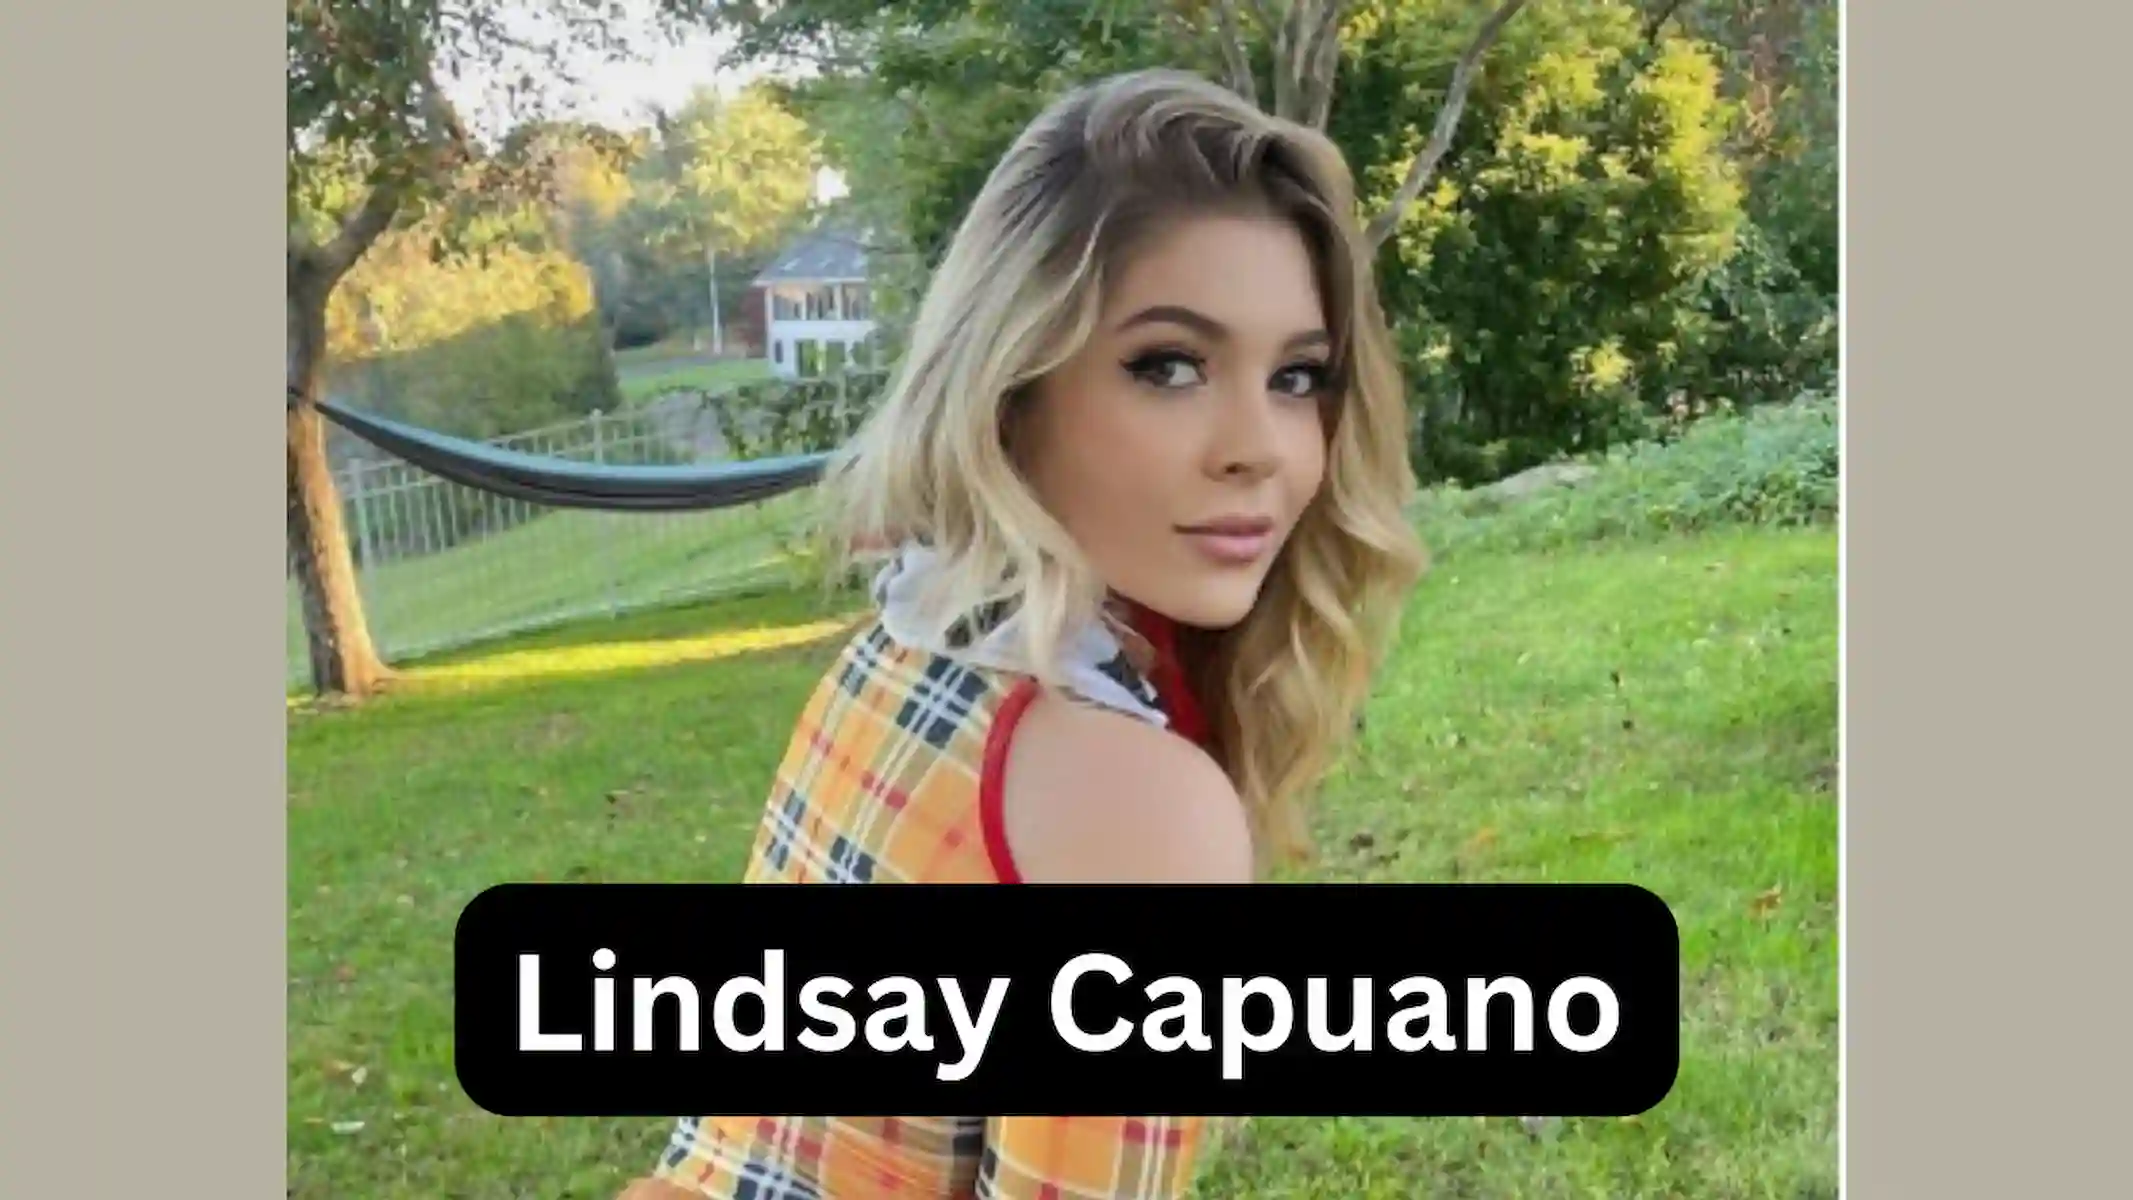 Lindsay Capuano Biography